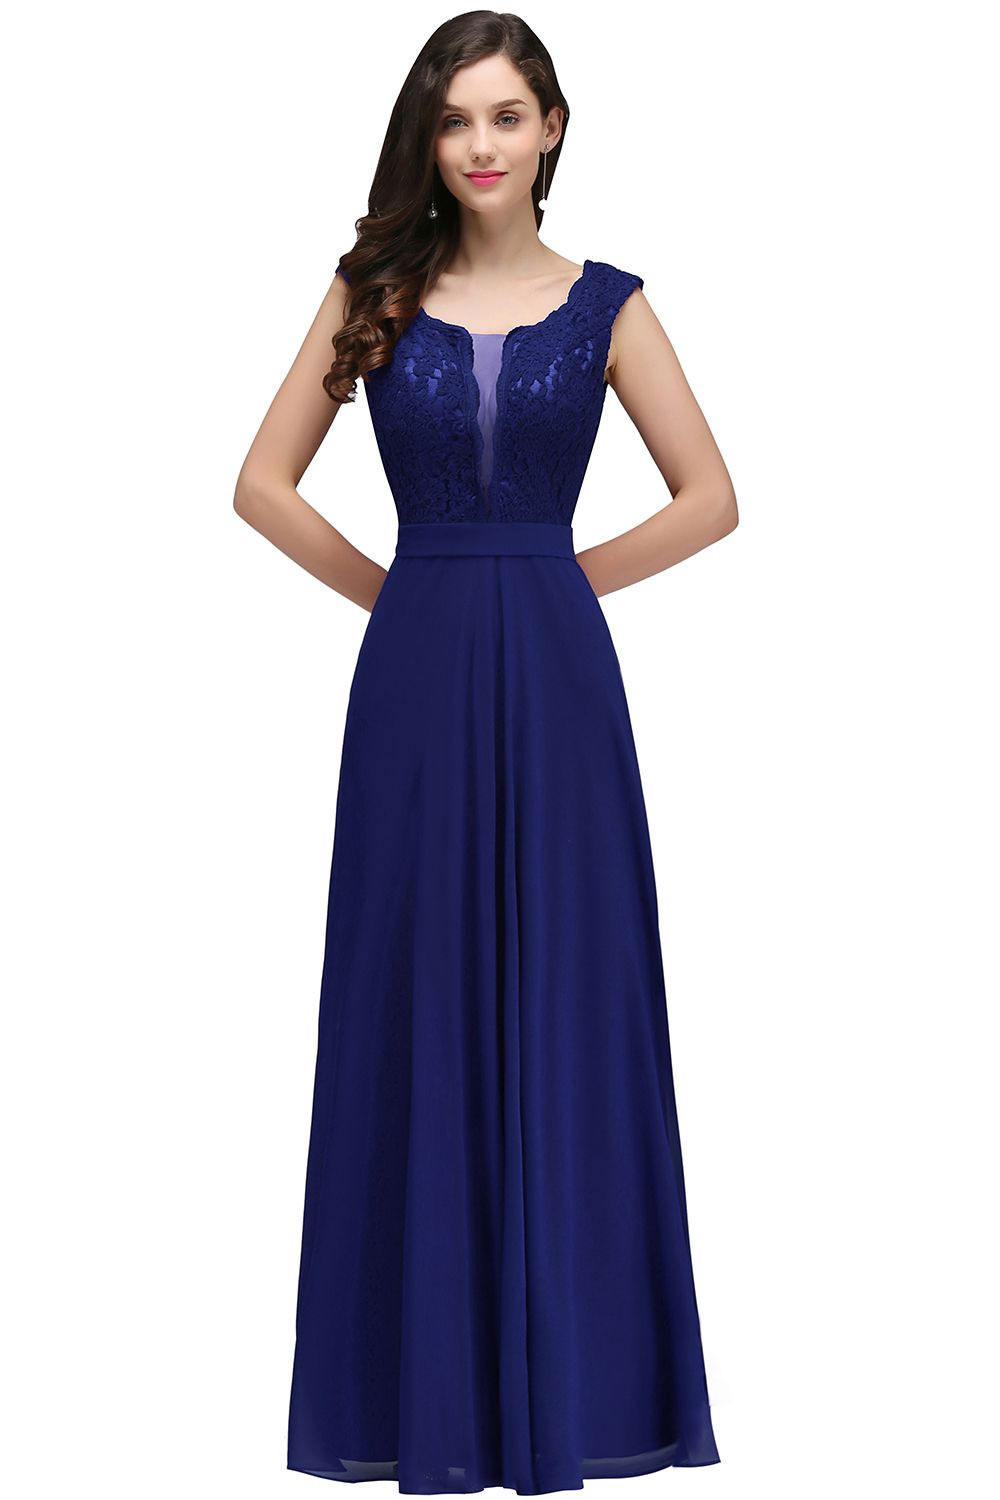 BMbridal Elegant Lace A-line Long Burgundy Prom Dress